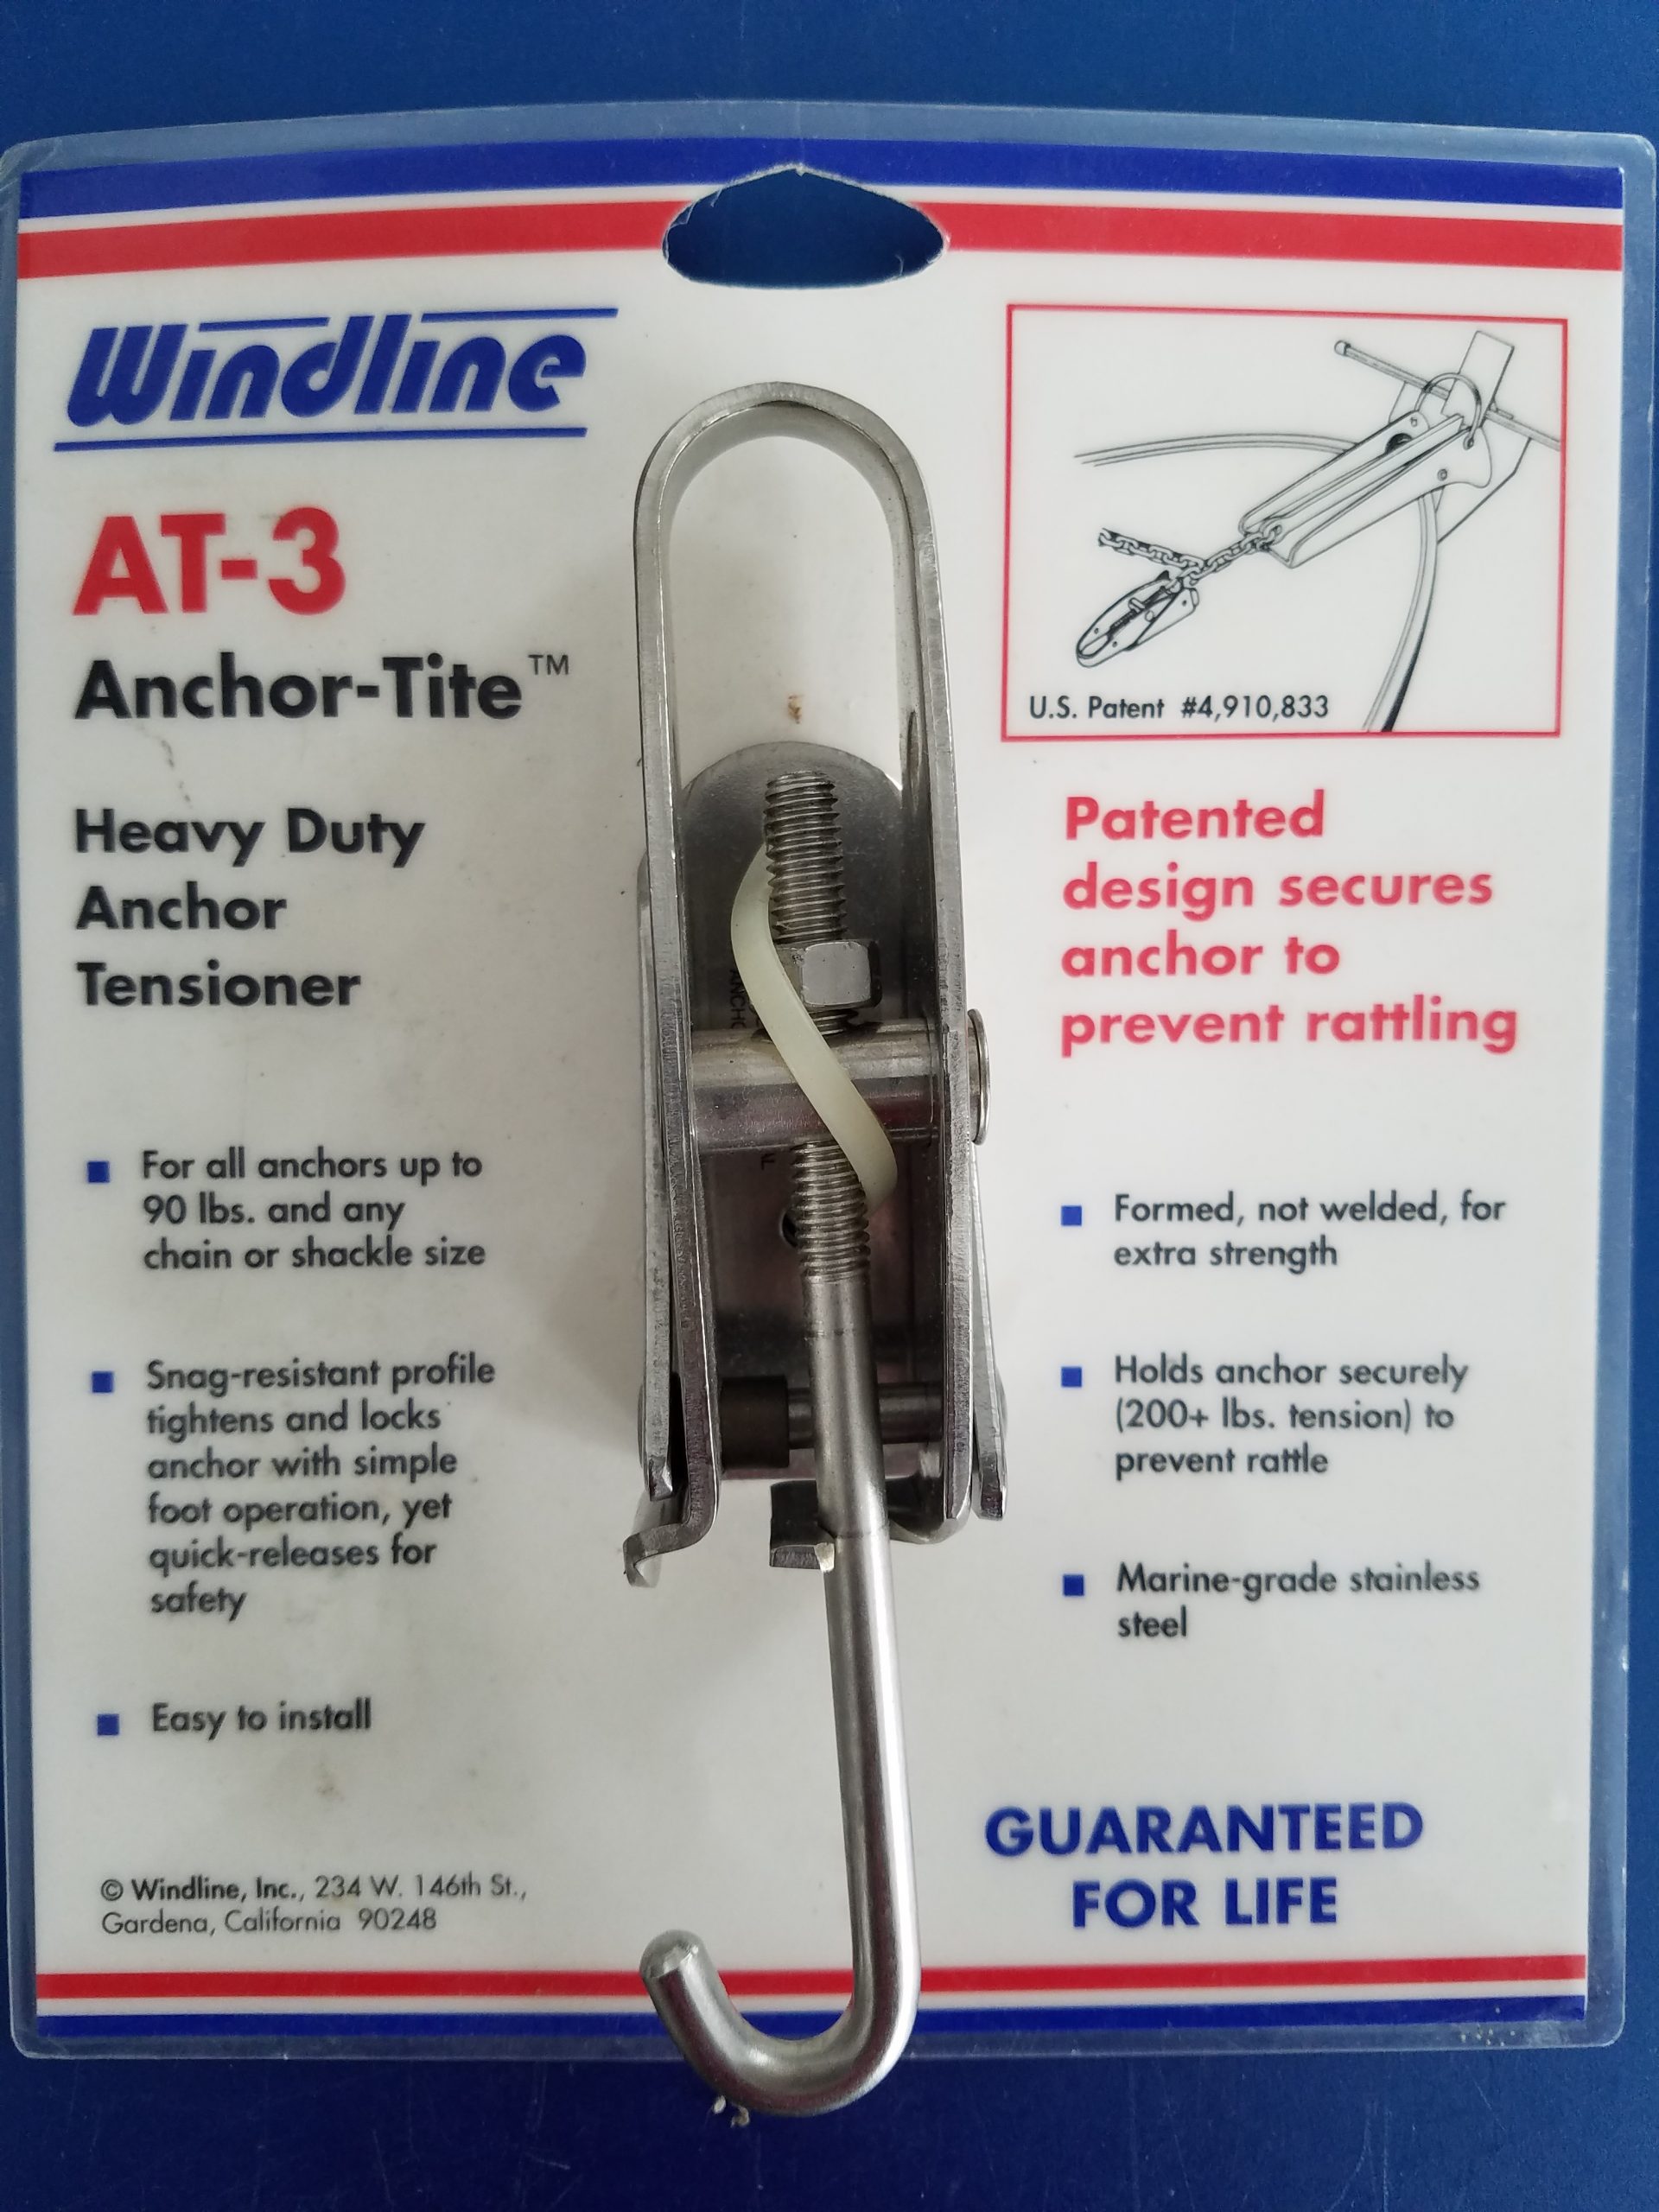 Windline AT-3 Anchor Tensioner